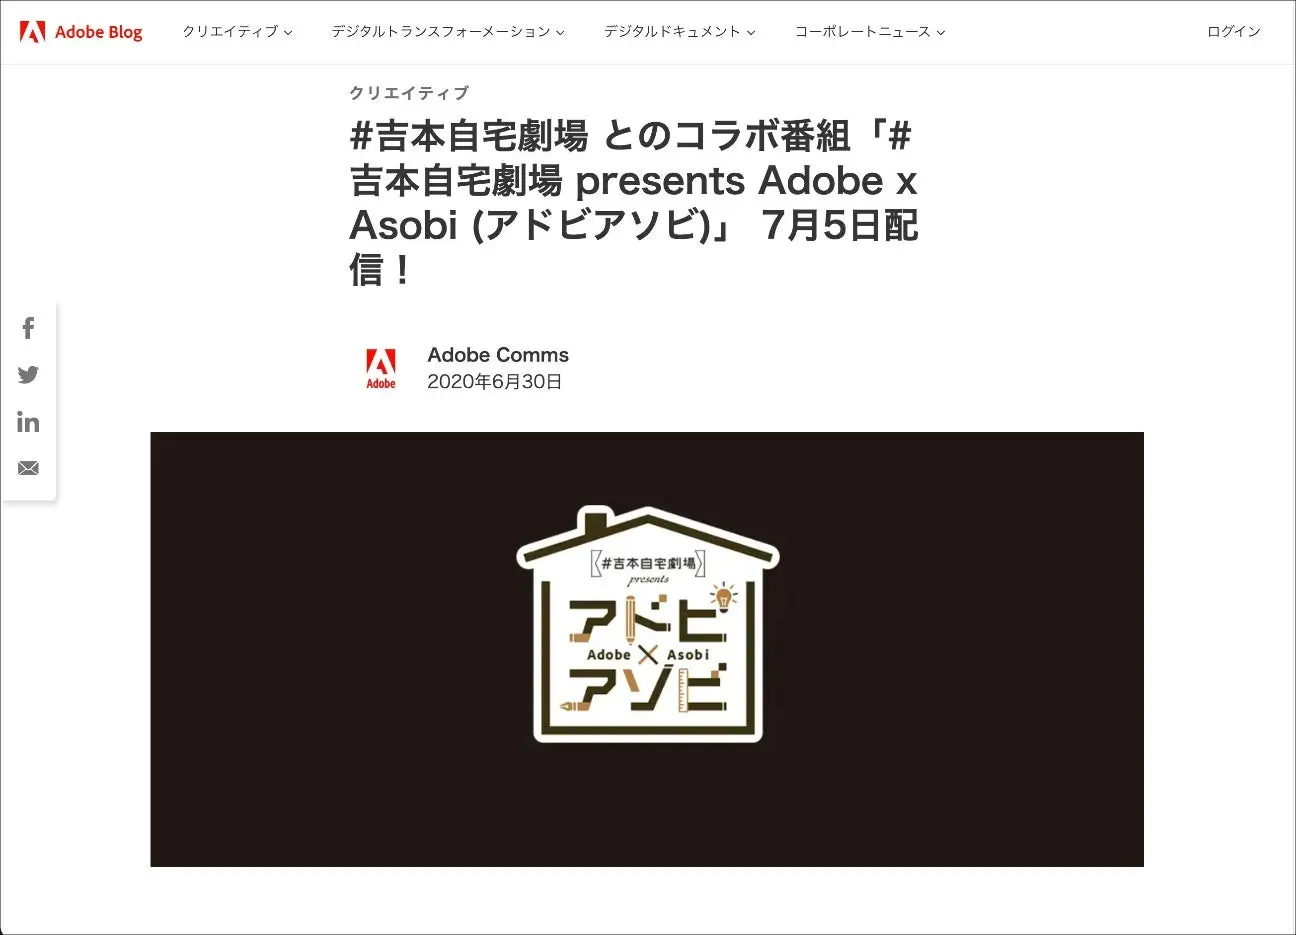 Adobe Blogに掲載された#吉本自宅劇場 presents Adobe x Asobi (アドビアソビ) 番組概要の告知（「#未来のくっきー!からの挑戦状」応募作品の最優秀作品賞会などを配信）